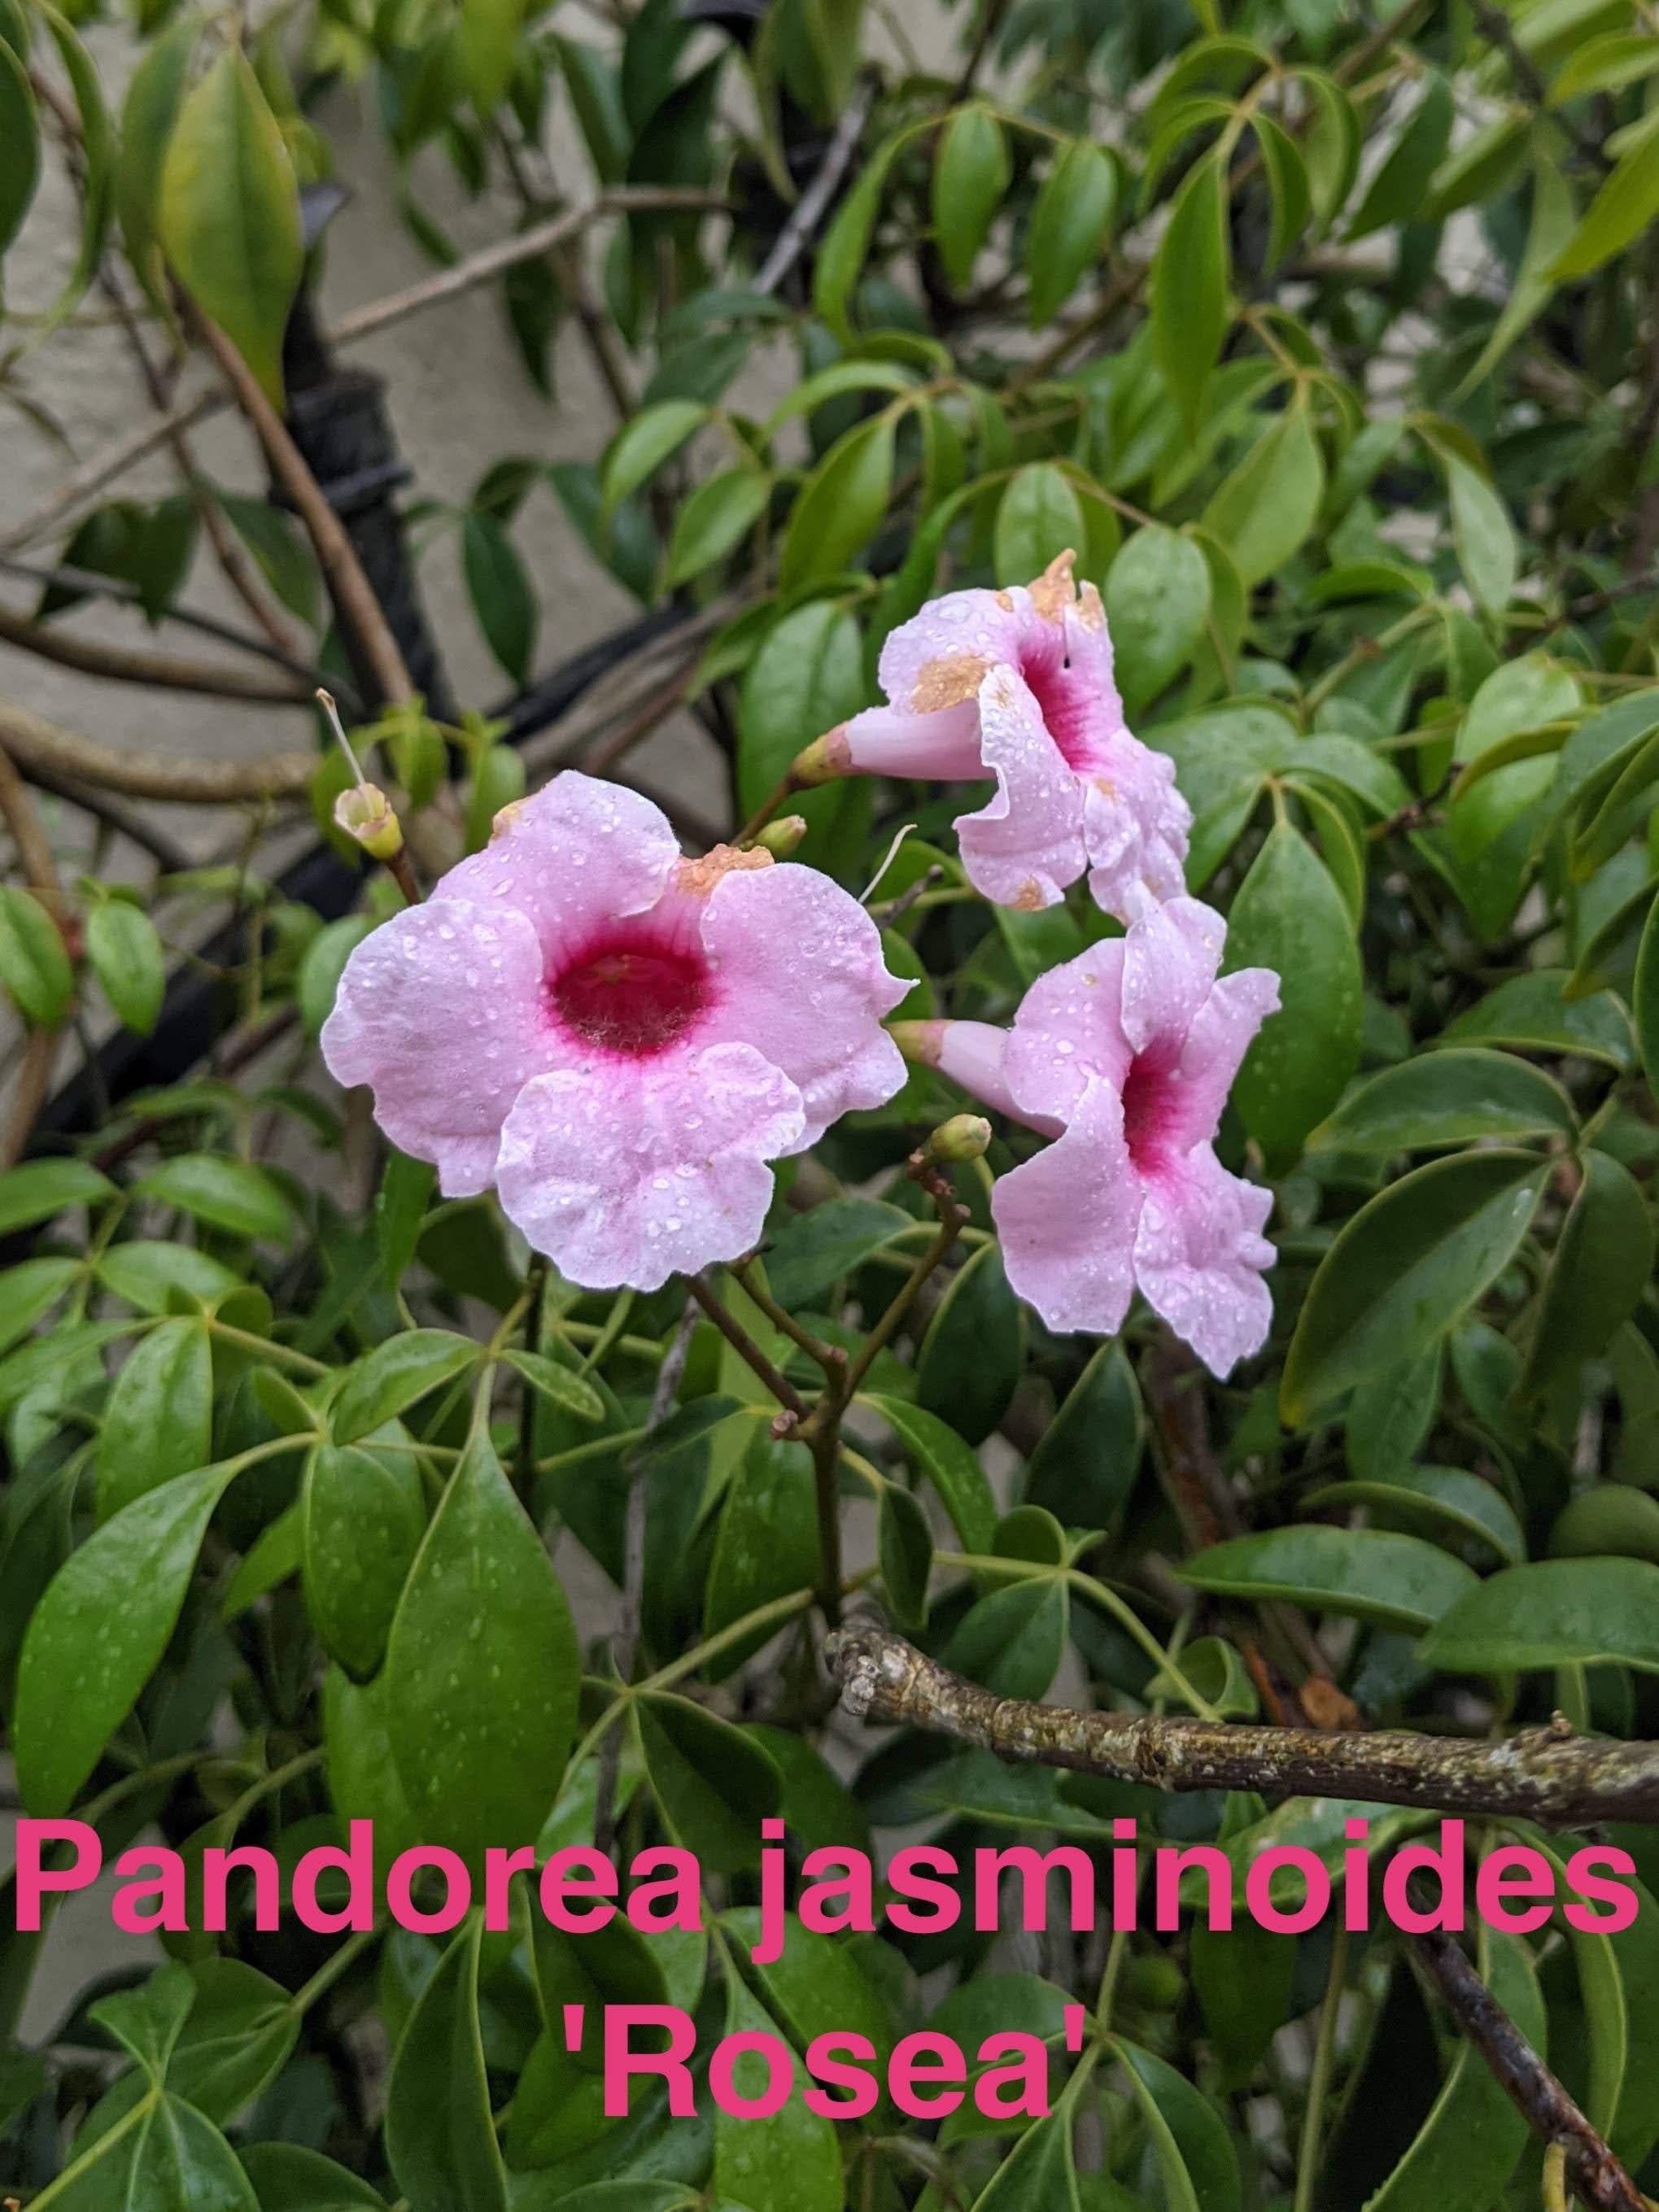 Pandorea jasminoides 'Rosea'